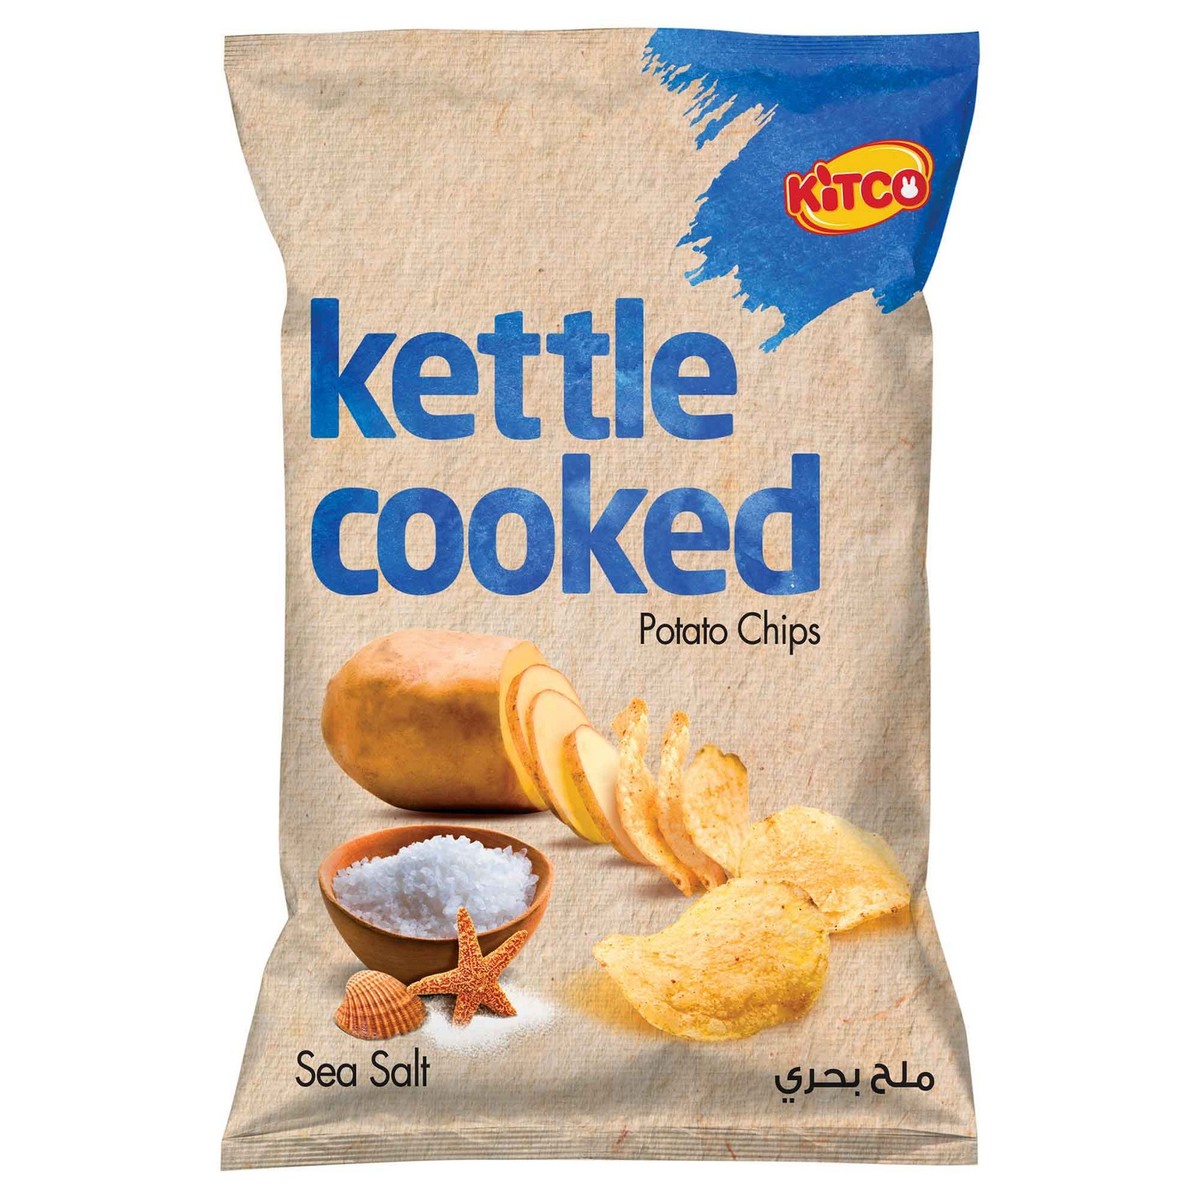 Kitco Kettle Cooked Potato Chips Sea Salt 40 g